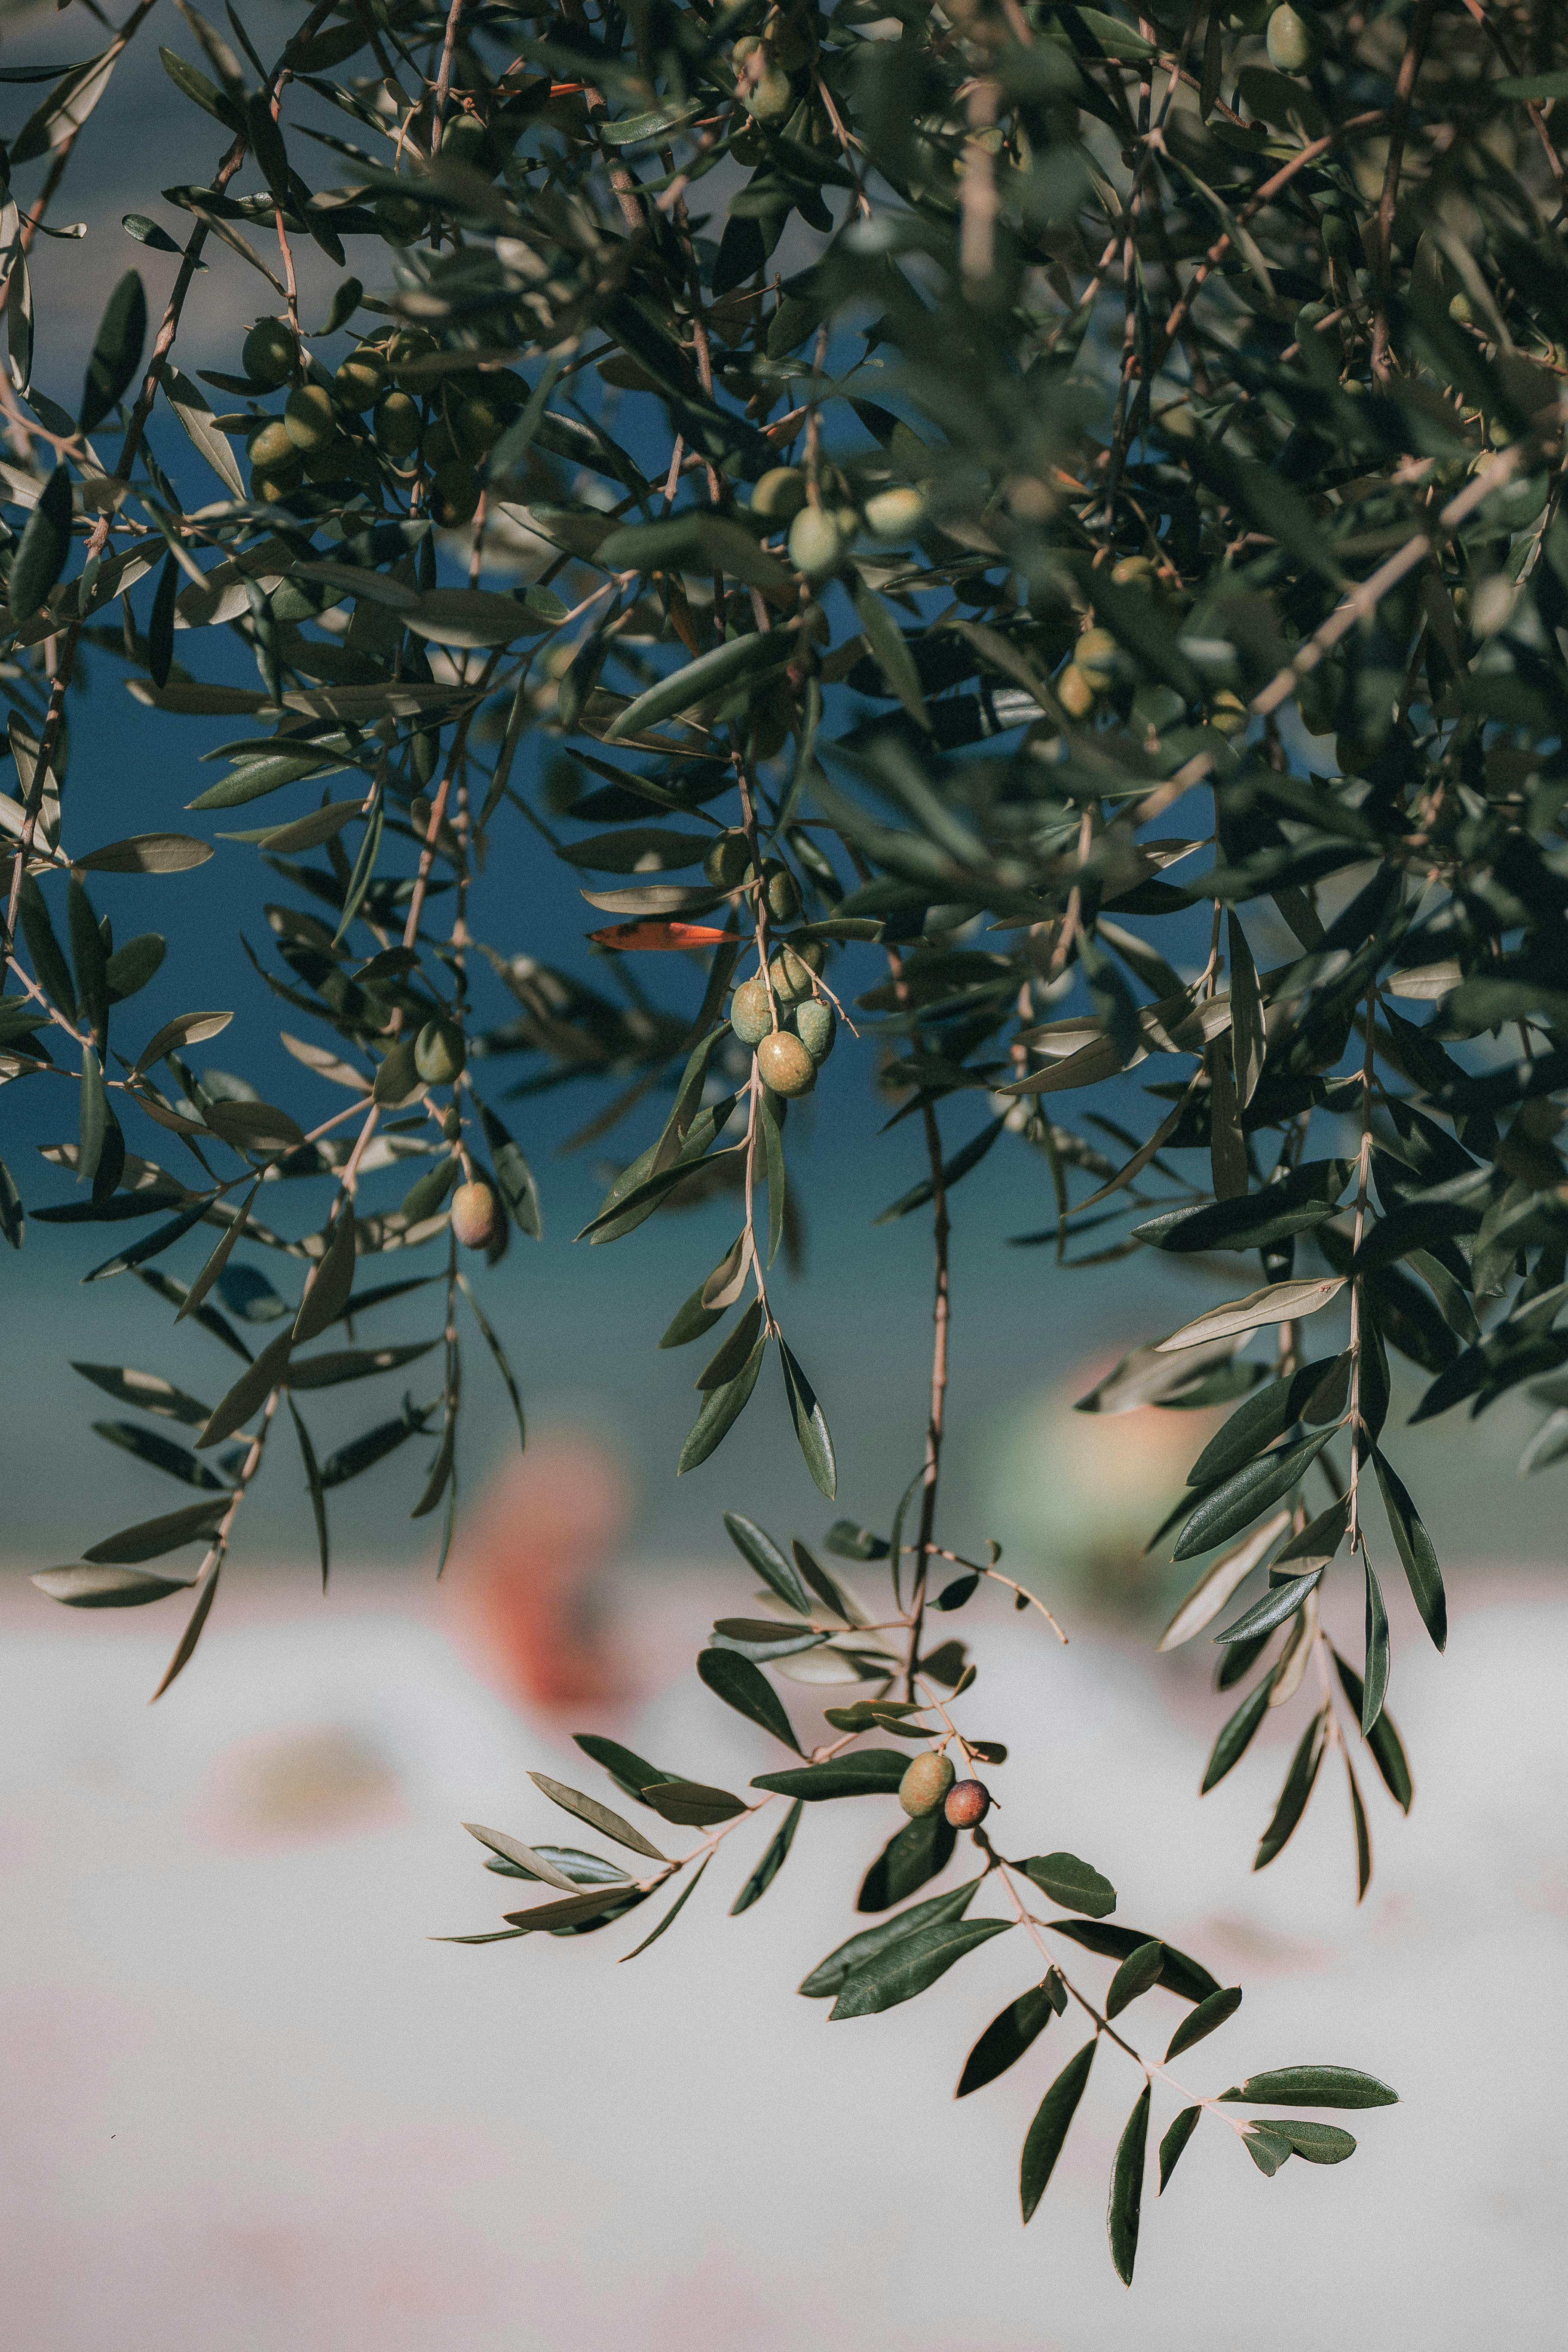 900 Free Olive Tree  Olives Images  Pixabay